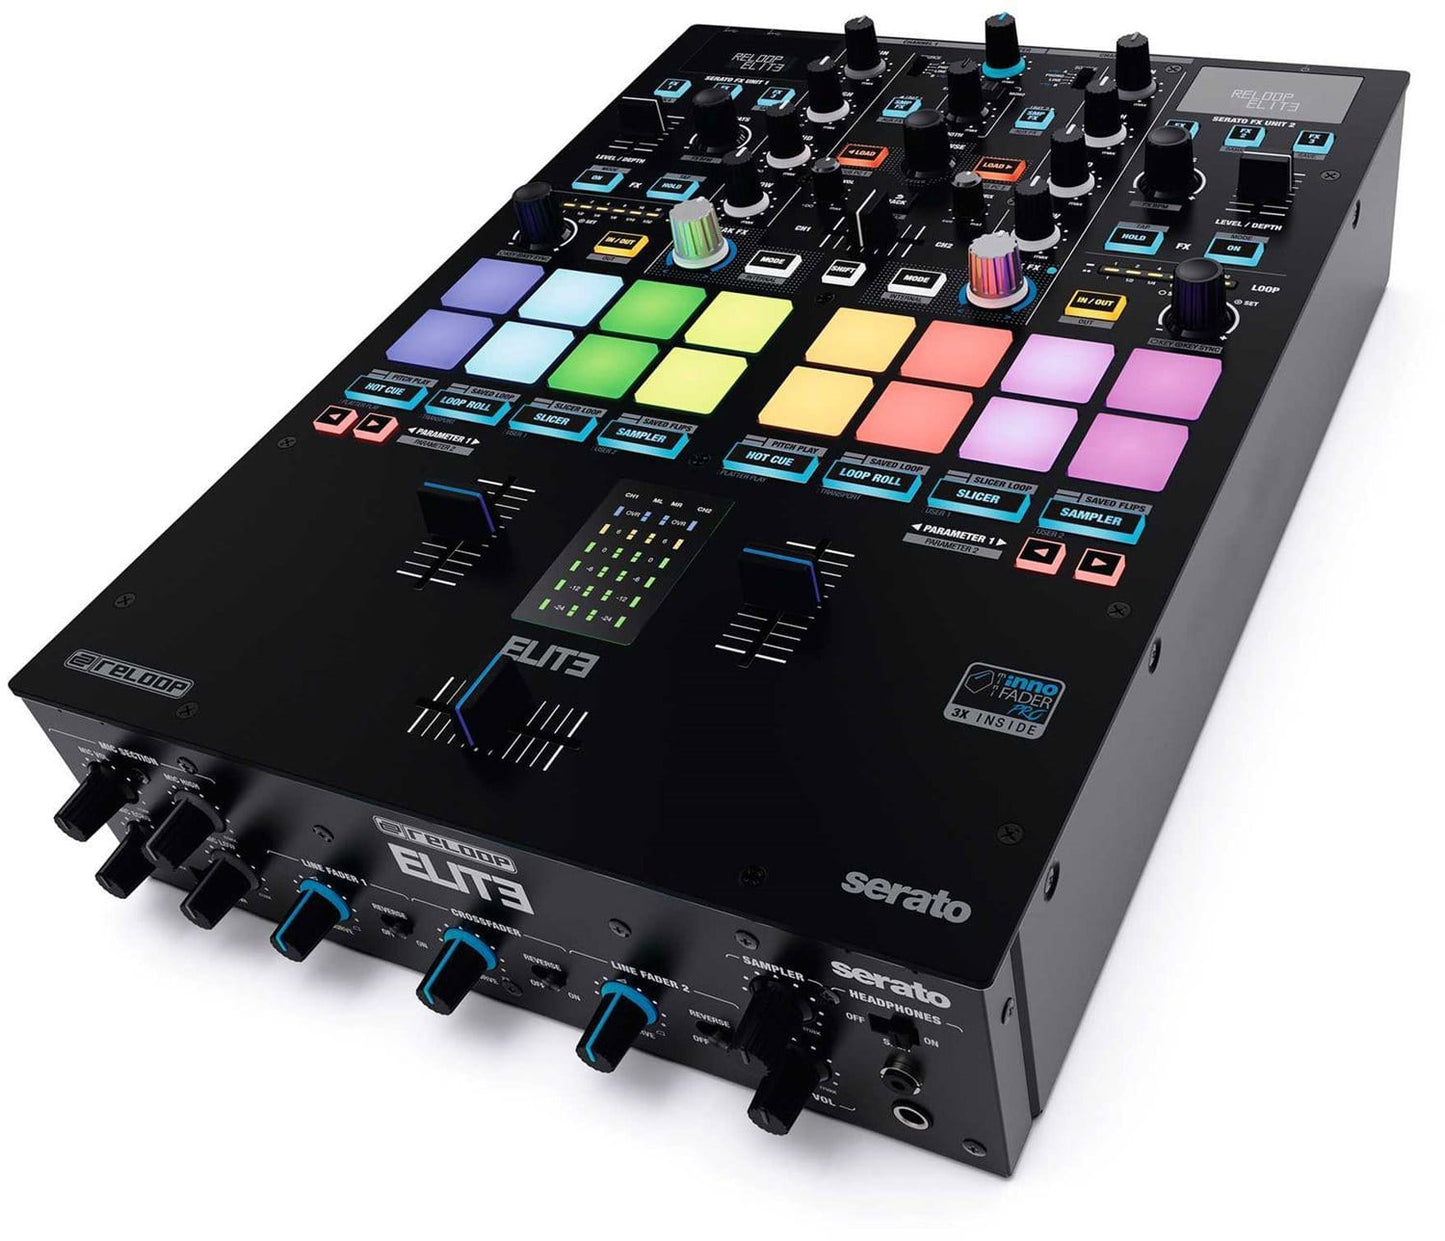 Reloop Elite High-Performance DVS Serato DJ Mixer - ProSound and Stage Lighting